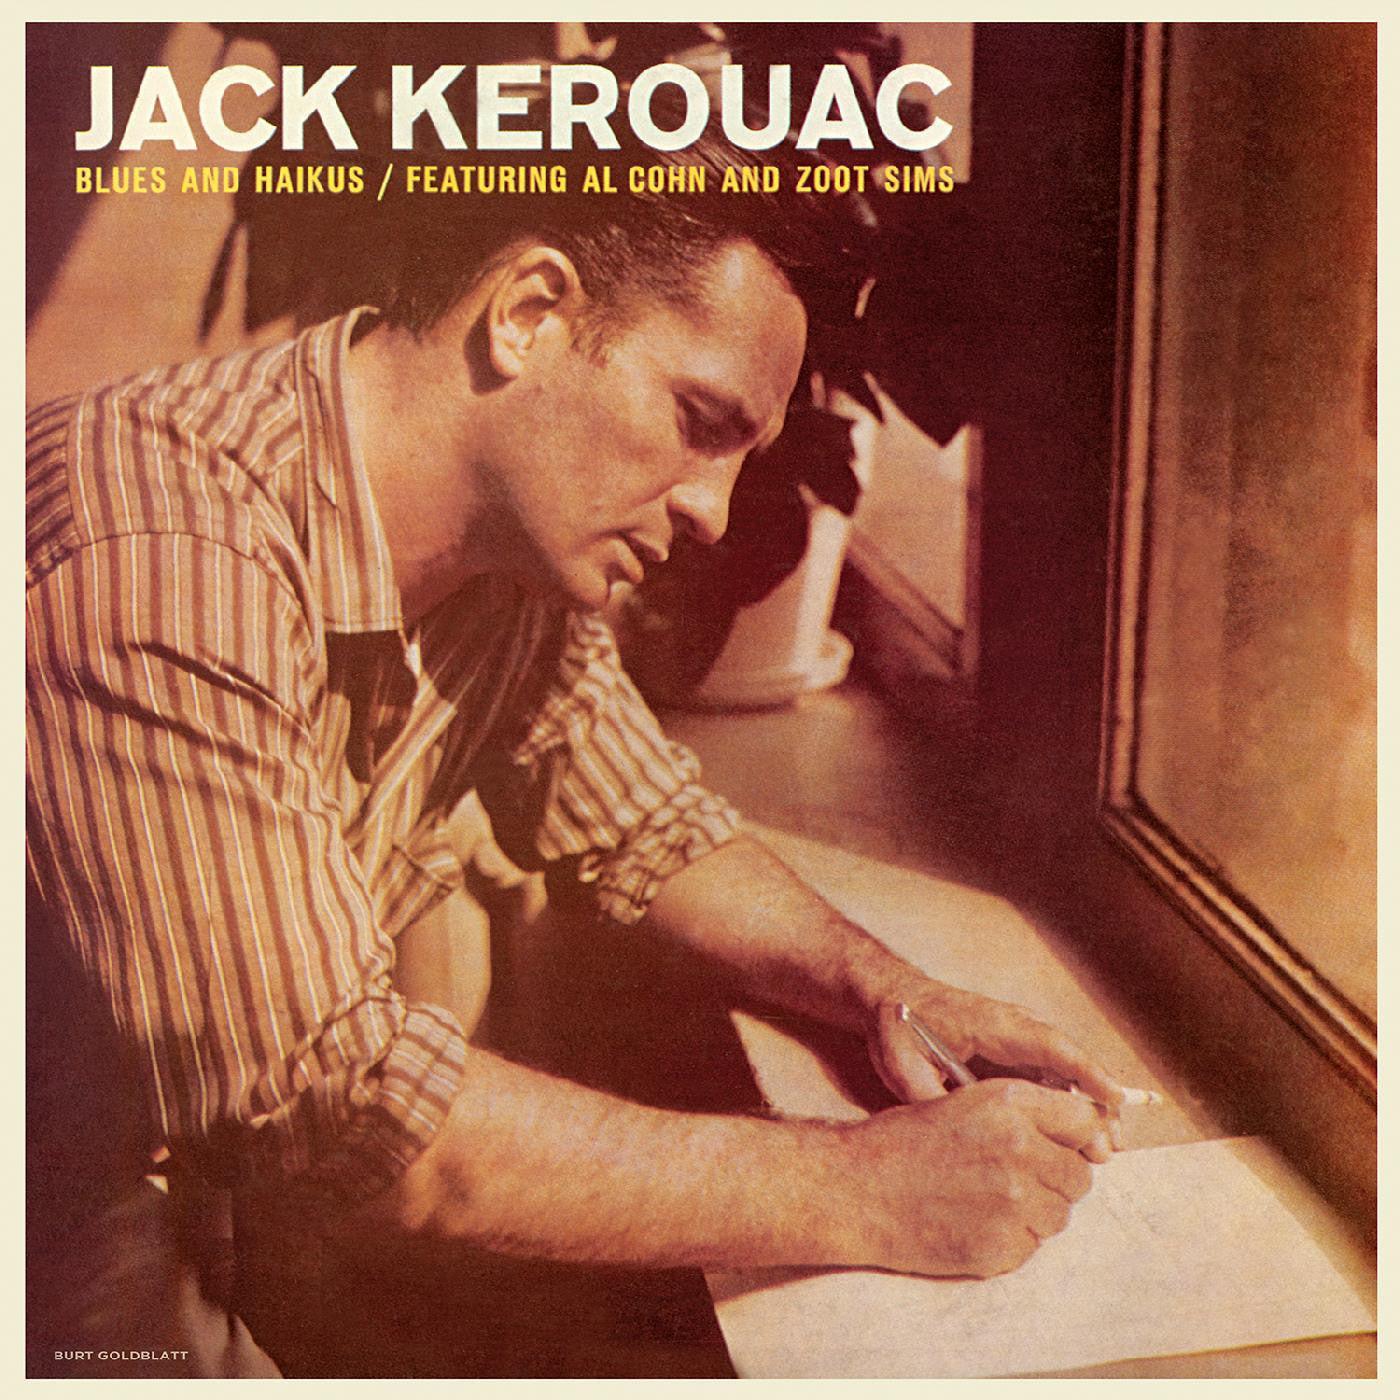 JACK KEROUAC FEATURING AL COHN & ZOOT SIMS 'BLUES AND HAIKUS' LP (100th Birthday, Tobacco Tan Vinyl)